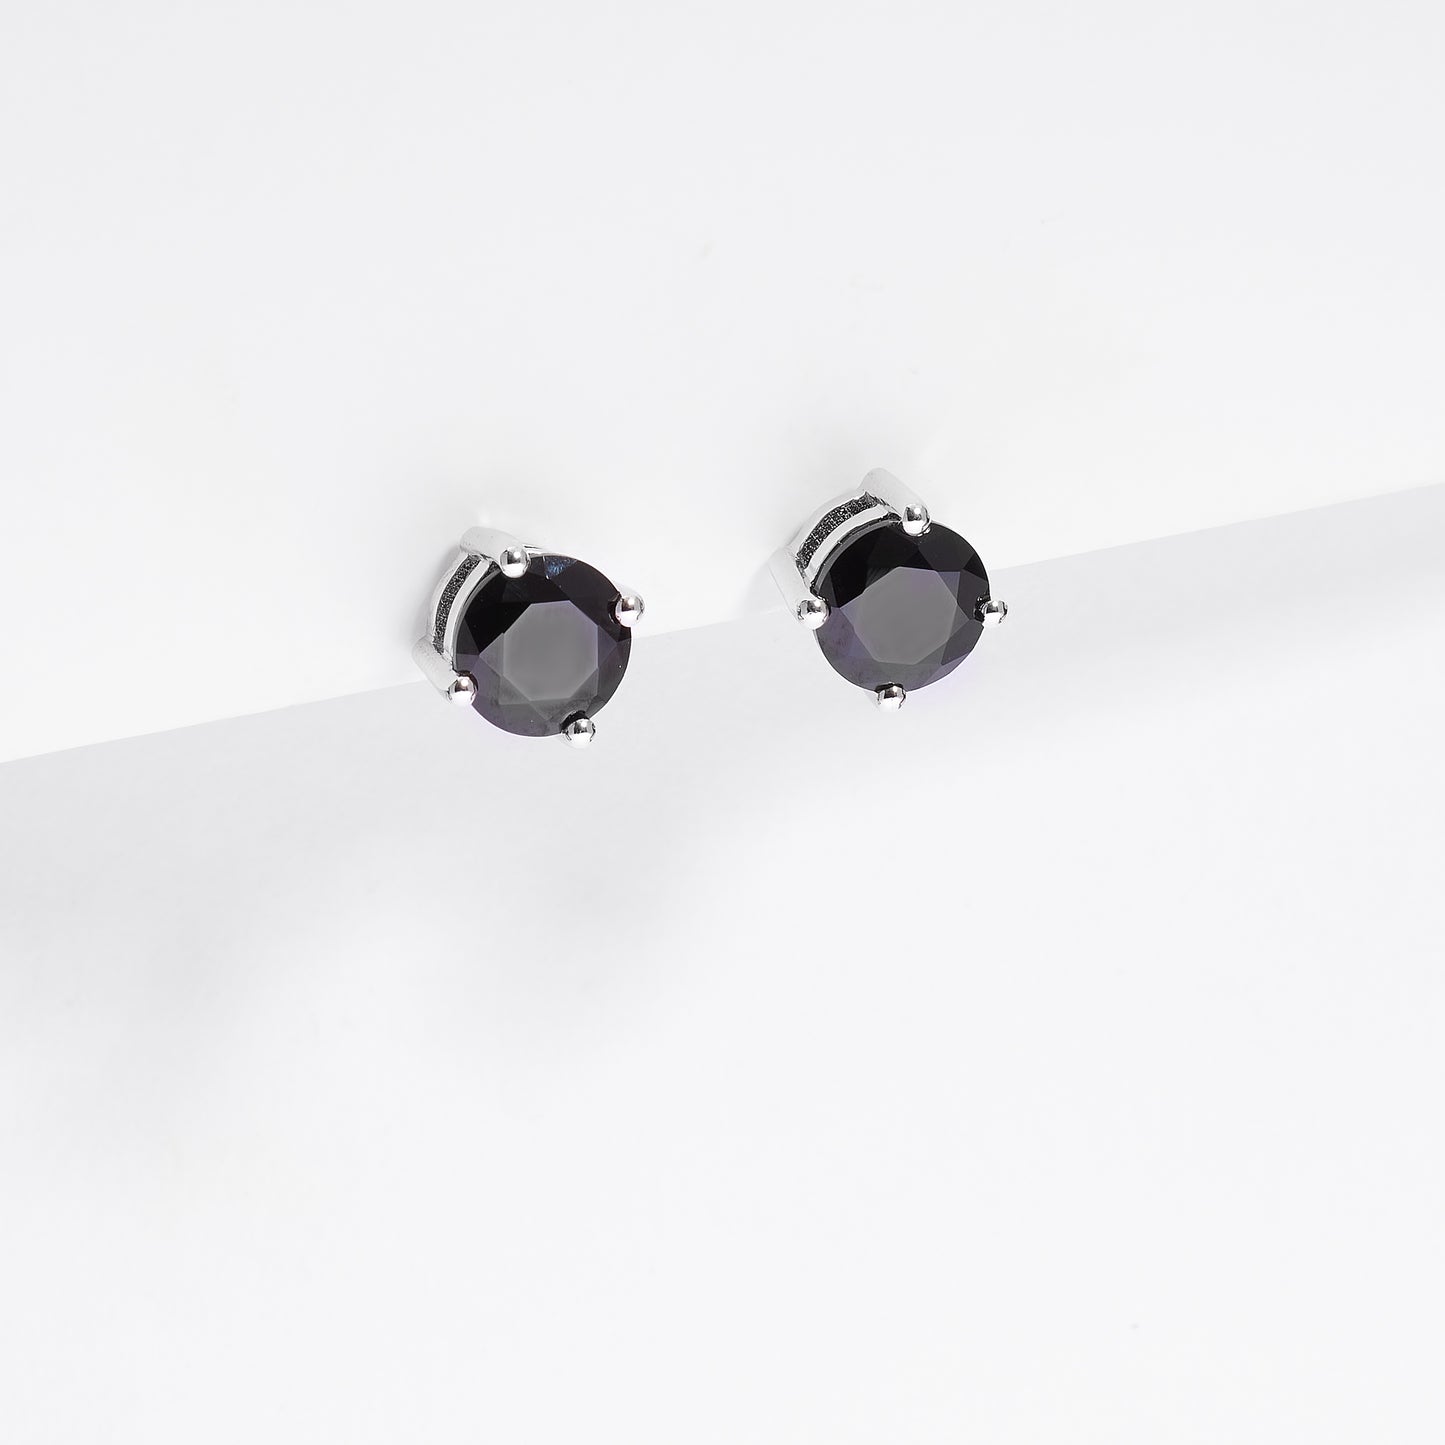 Sterling Silver Black Zirconia Stud Earrings